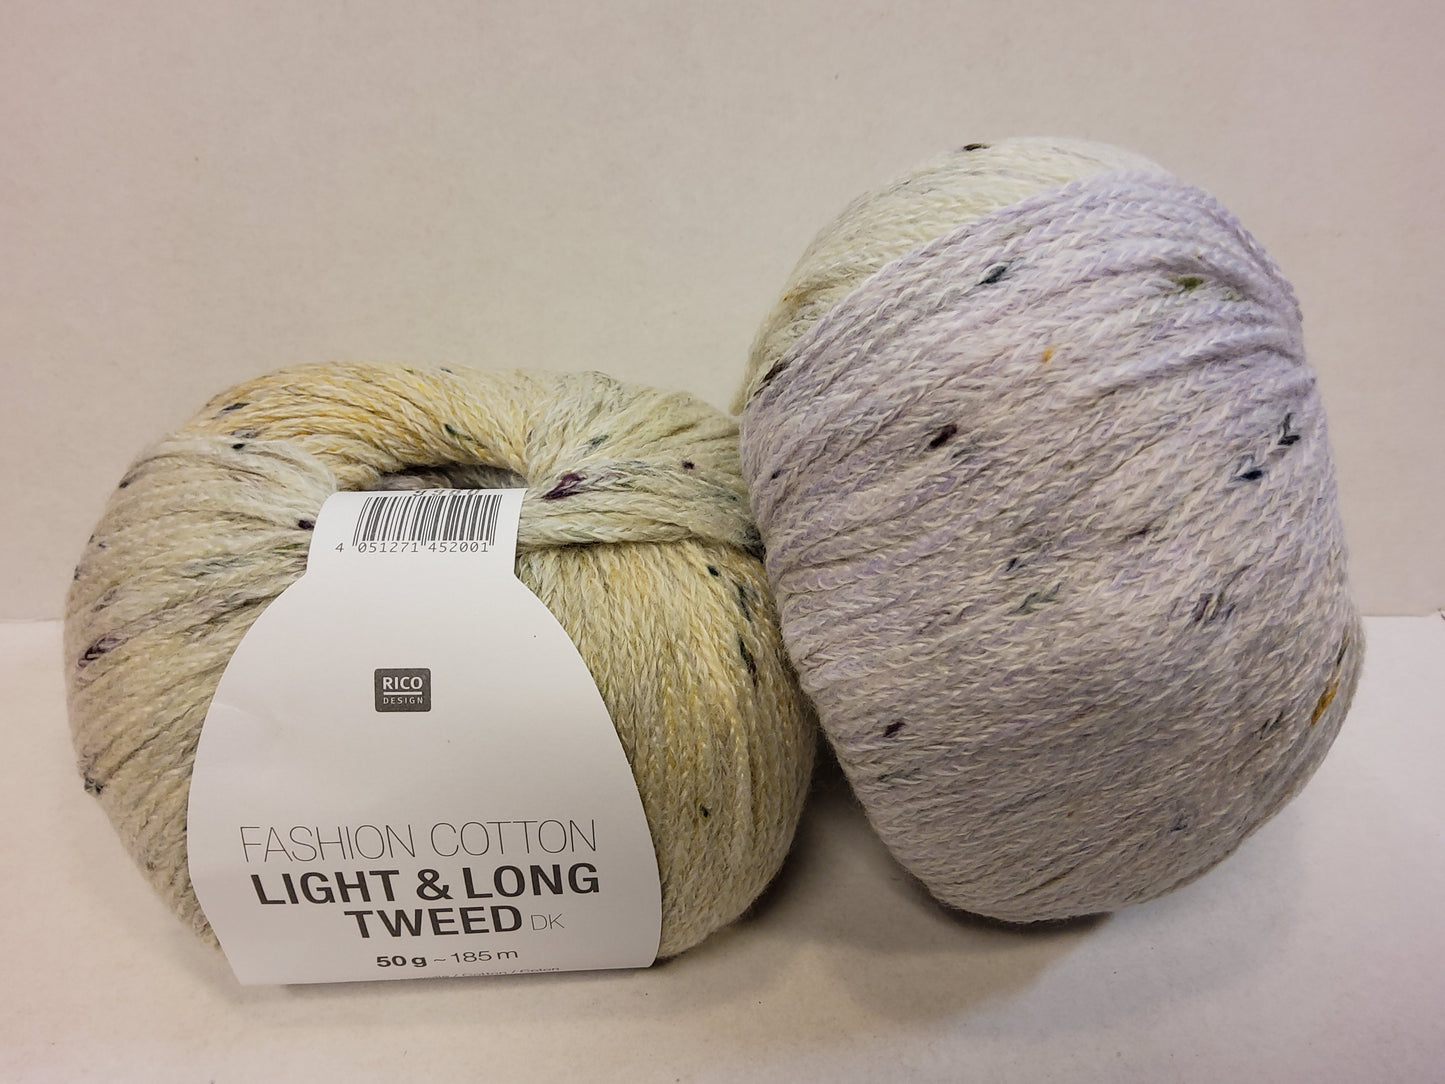 Fashion Cotton Light & Long Tweed